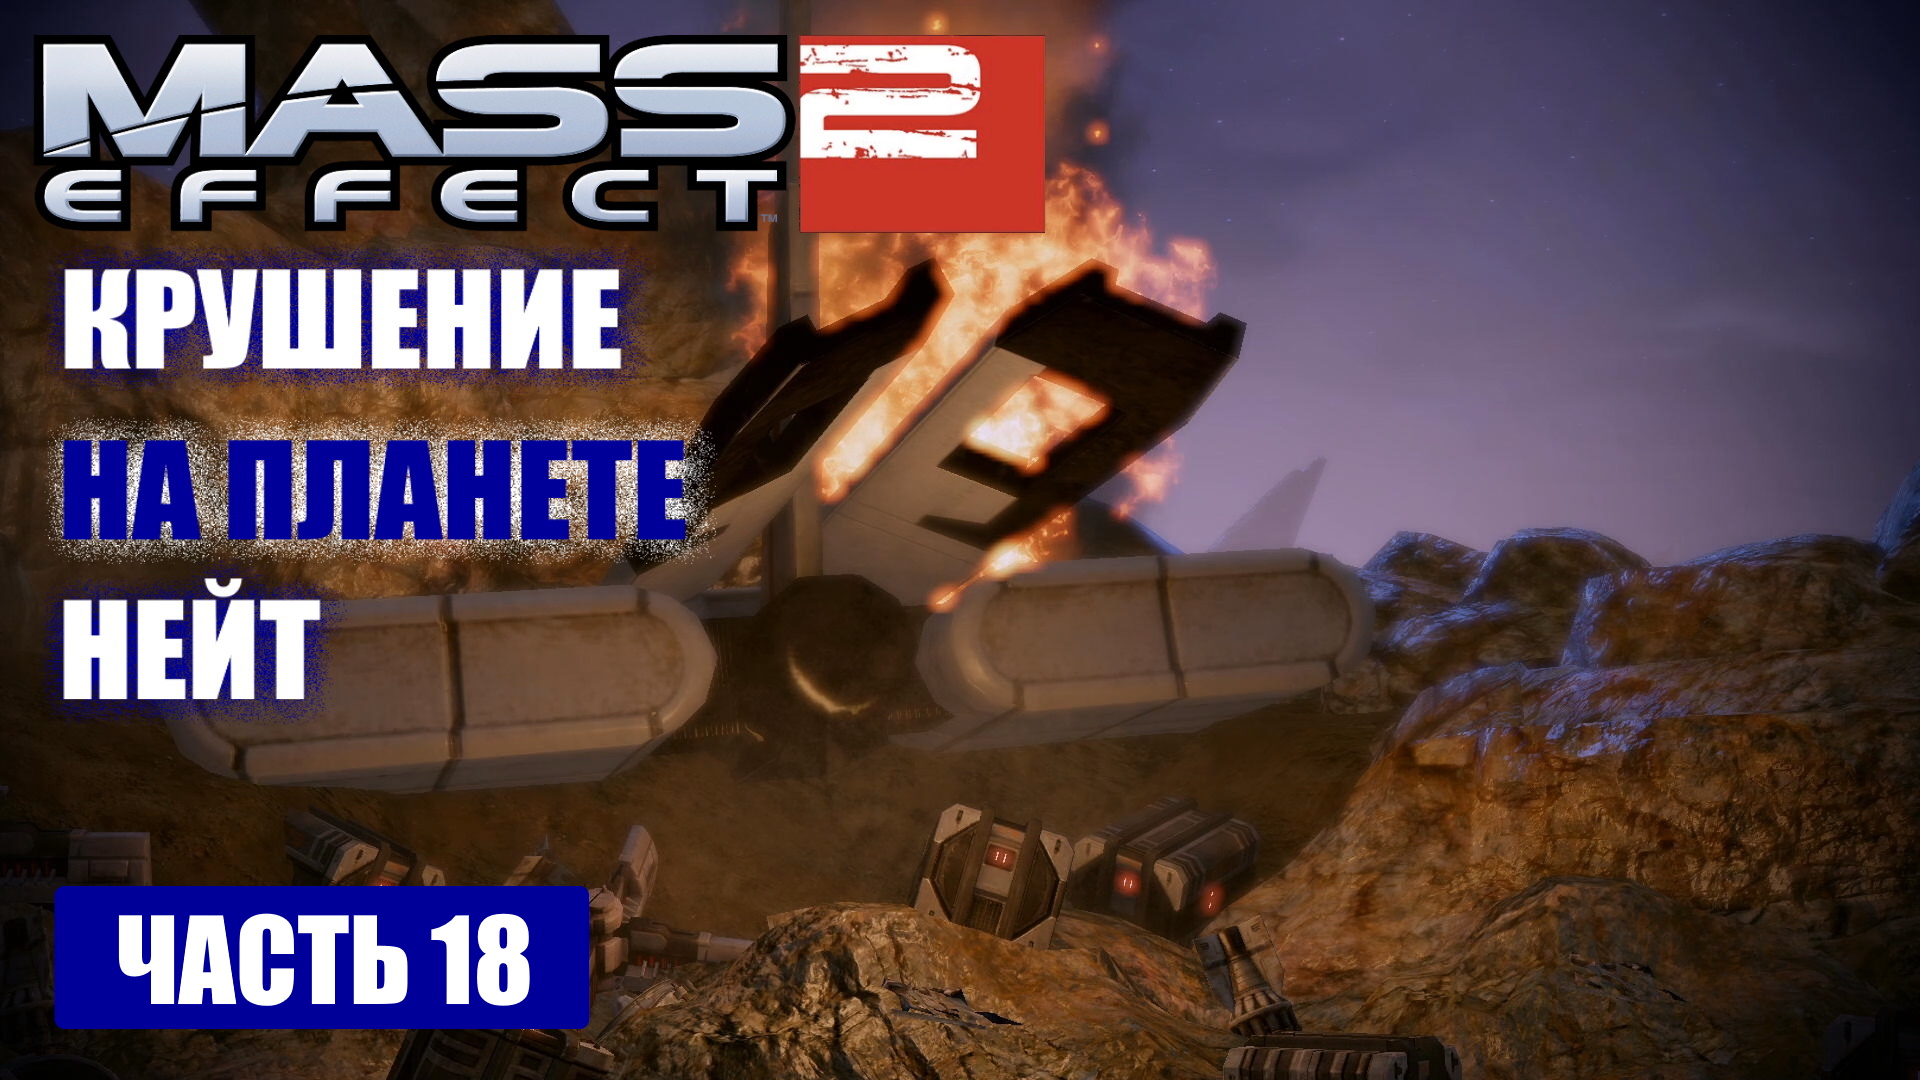 Mass Effect 2 прохождение - МЕСТО КРУШЕНИЯ ТРАНСПОРТНОГО КОРАБЛЯ "КОРСИКА" (русская озвучка) #18